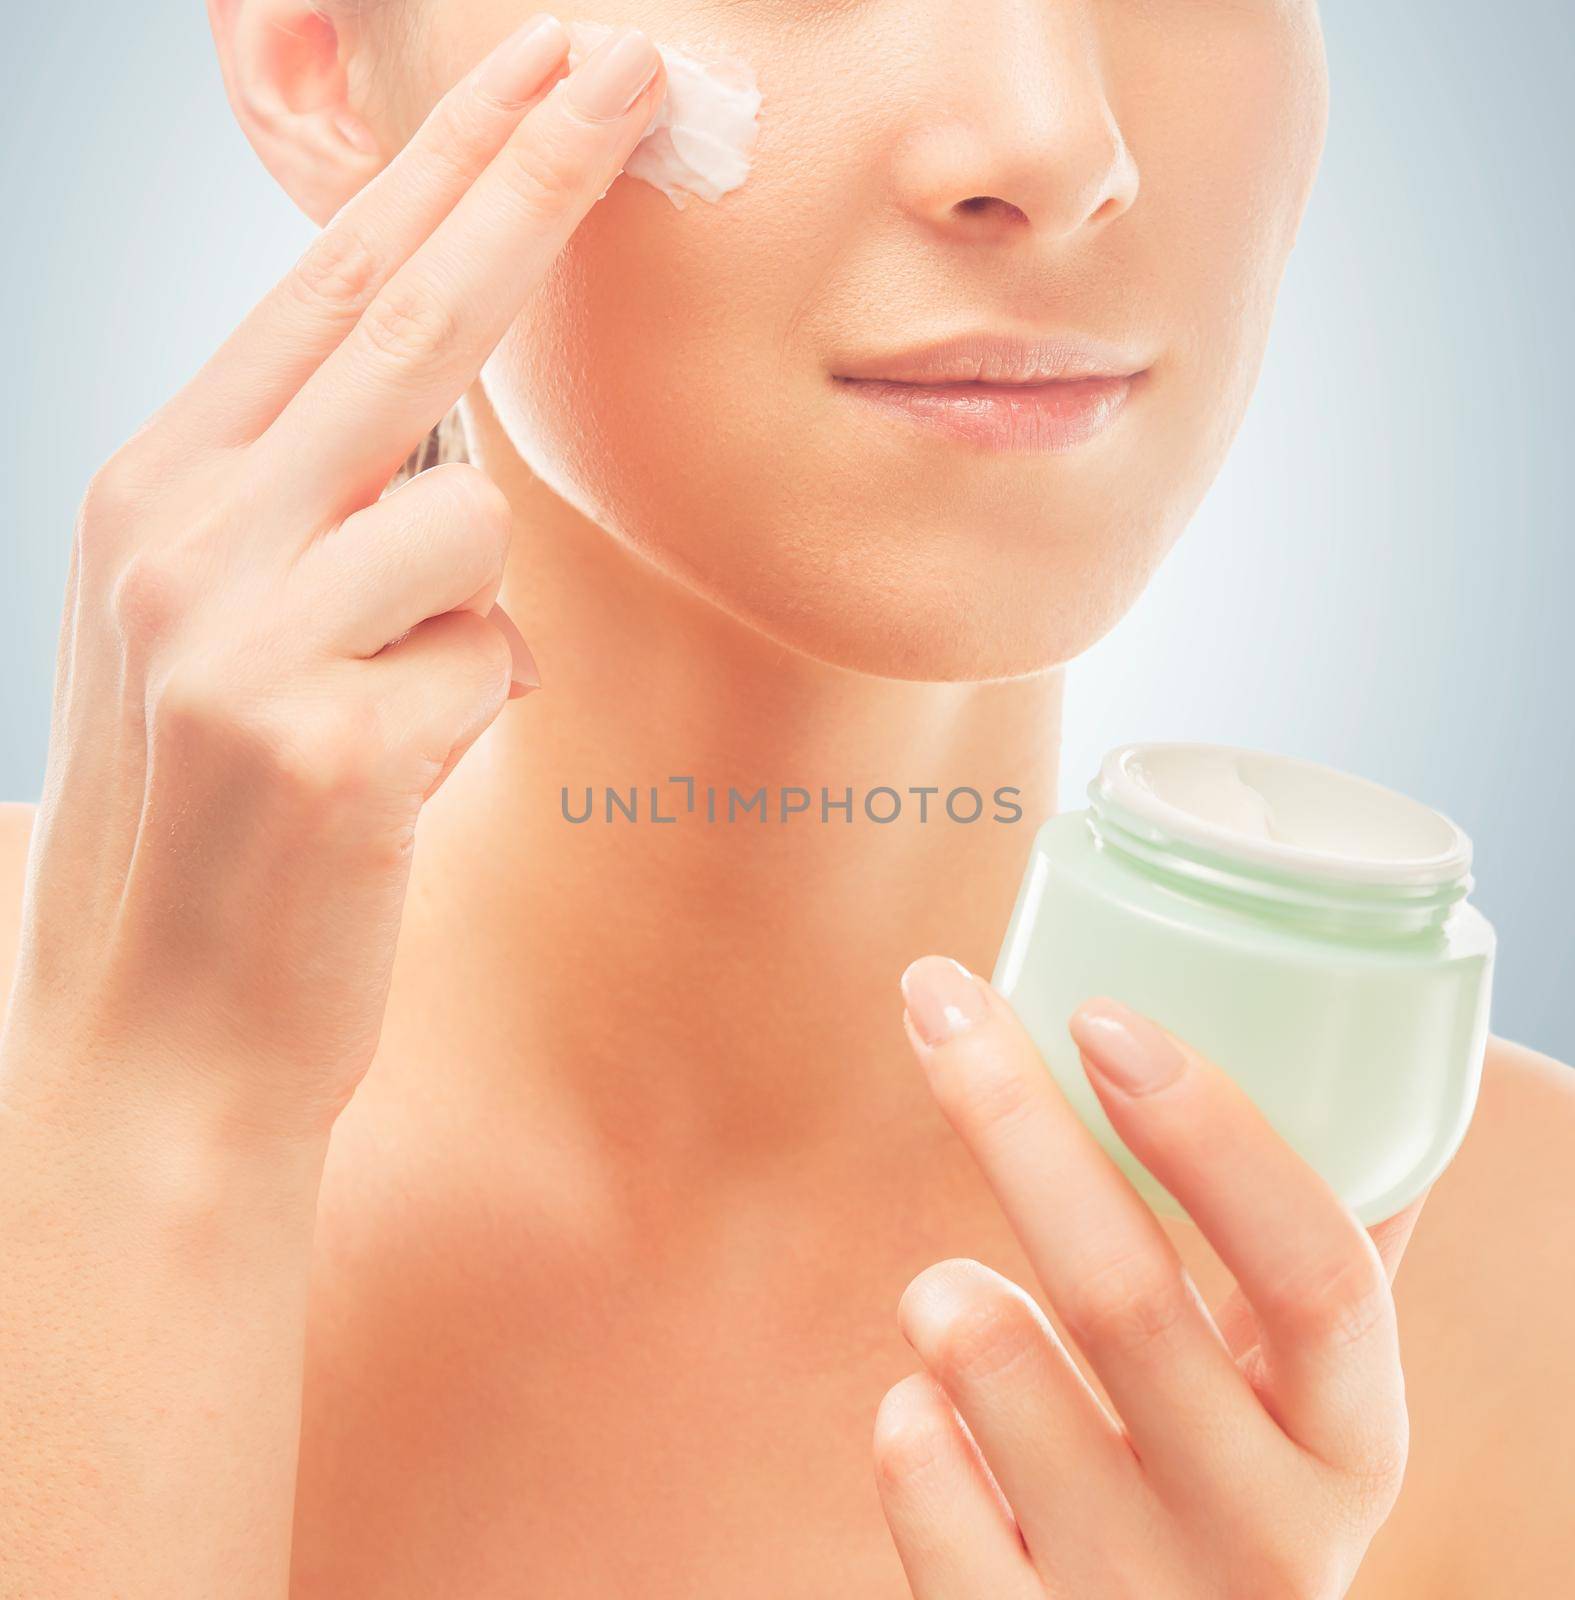 Woman applies cream on face, close-up by alexAleksei